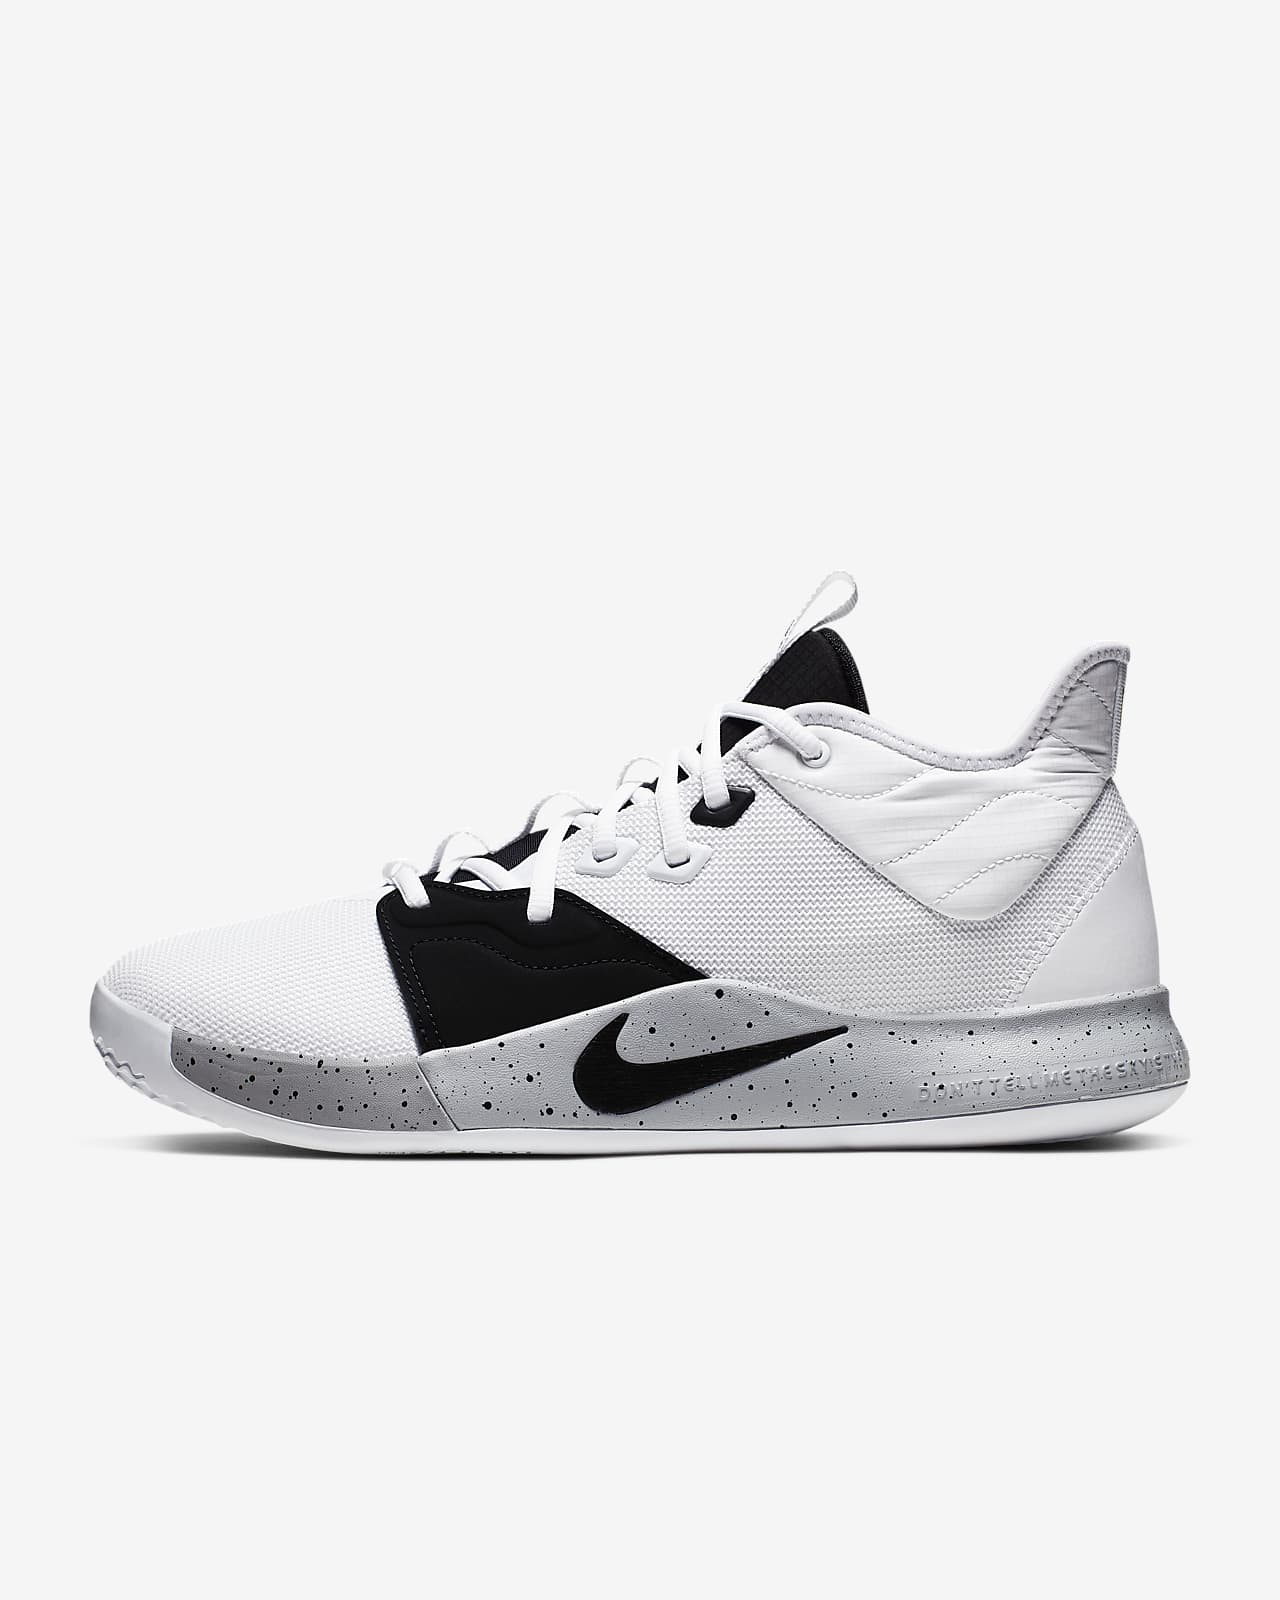 PG 3 Basketball Shoe. Nike NZ